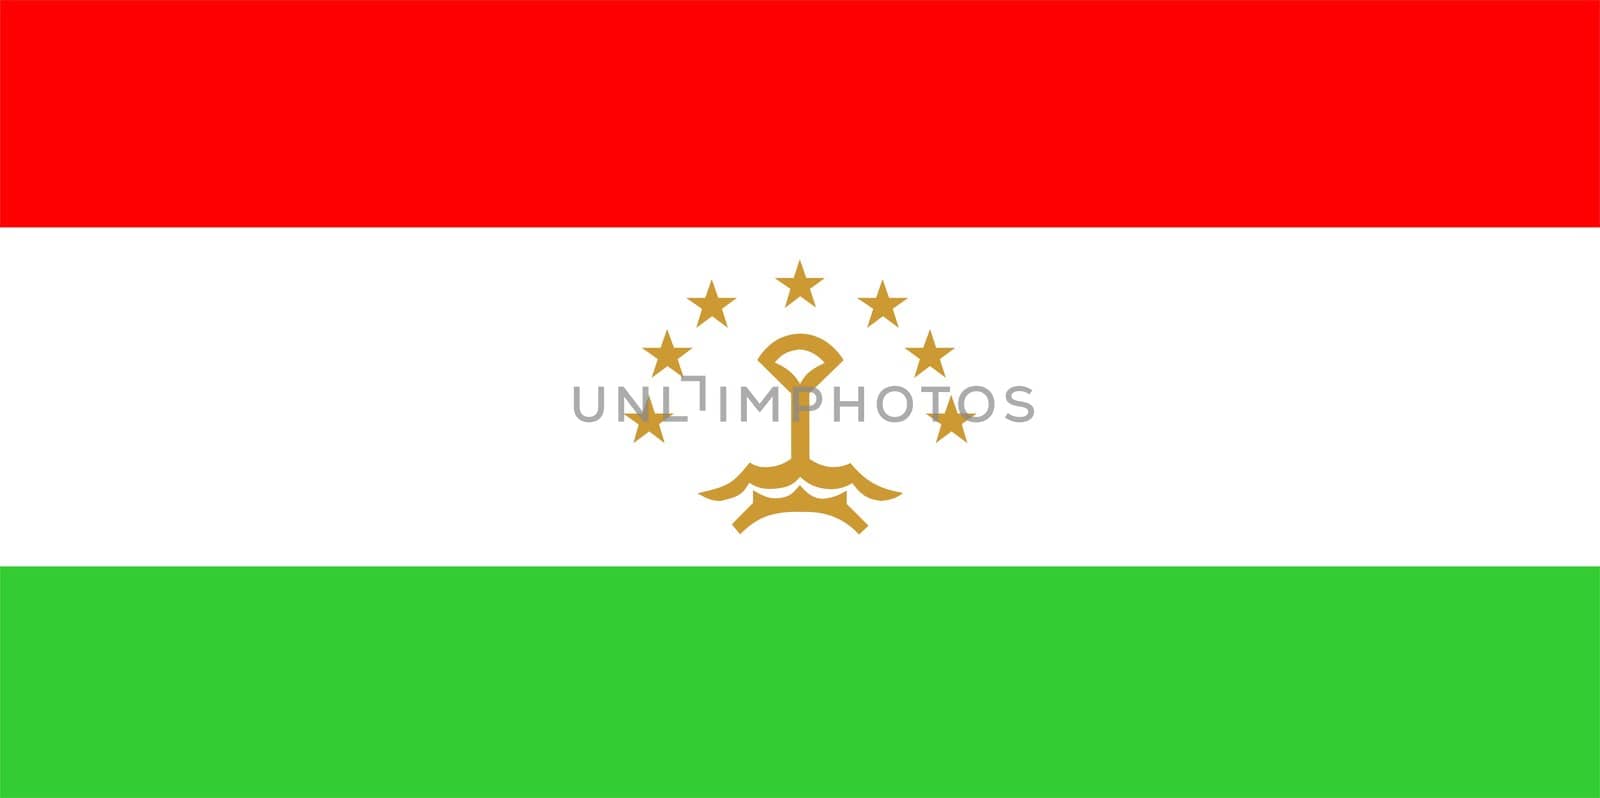 2D illustration of the flag of Tajikistan